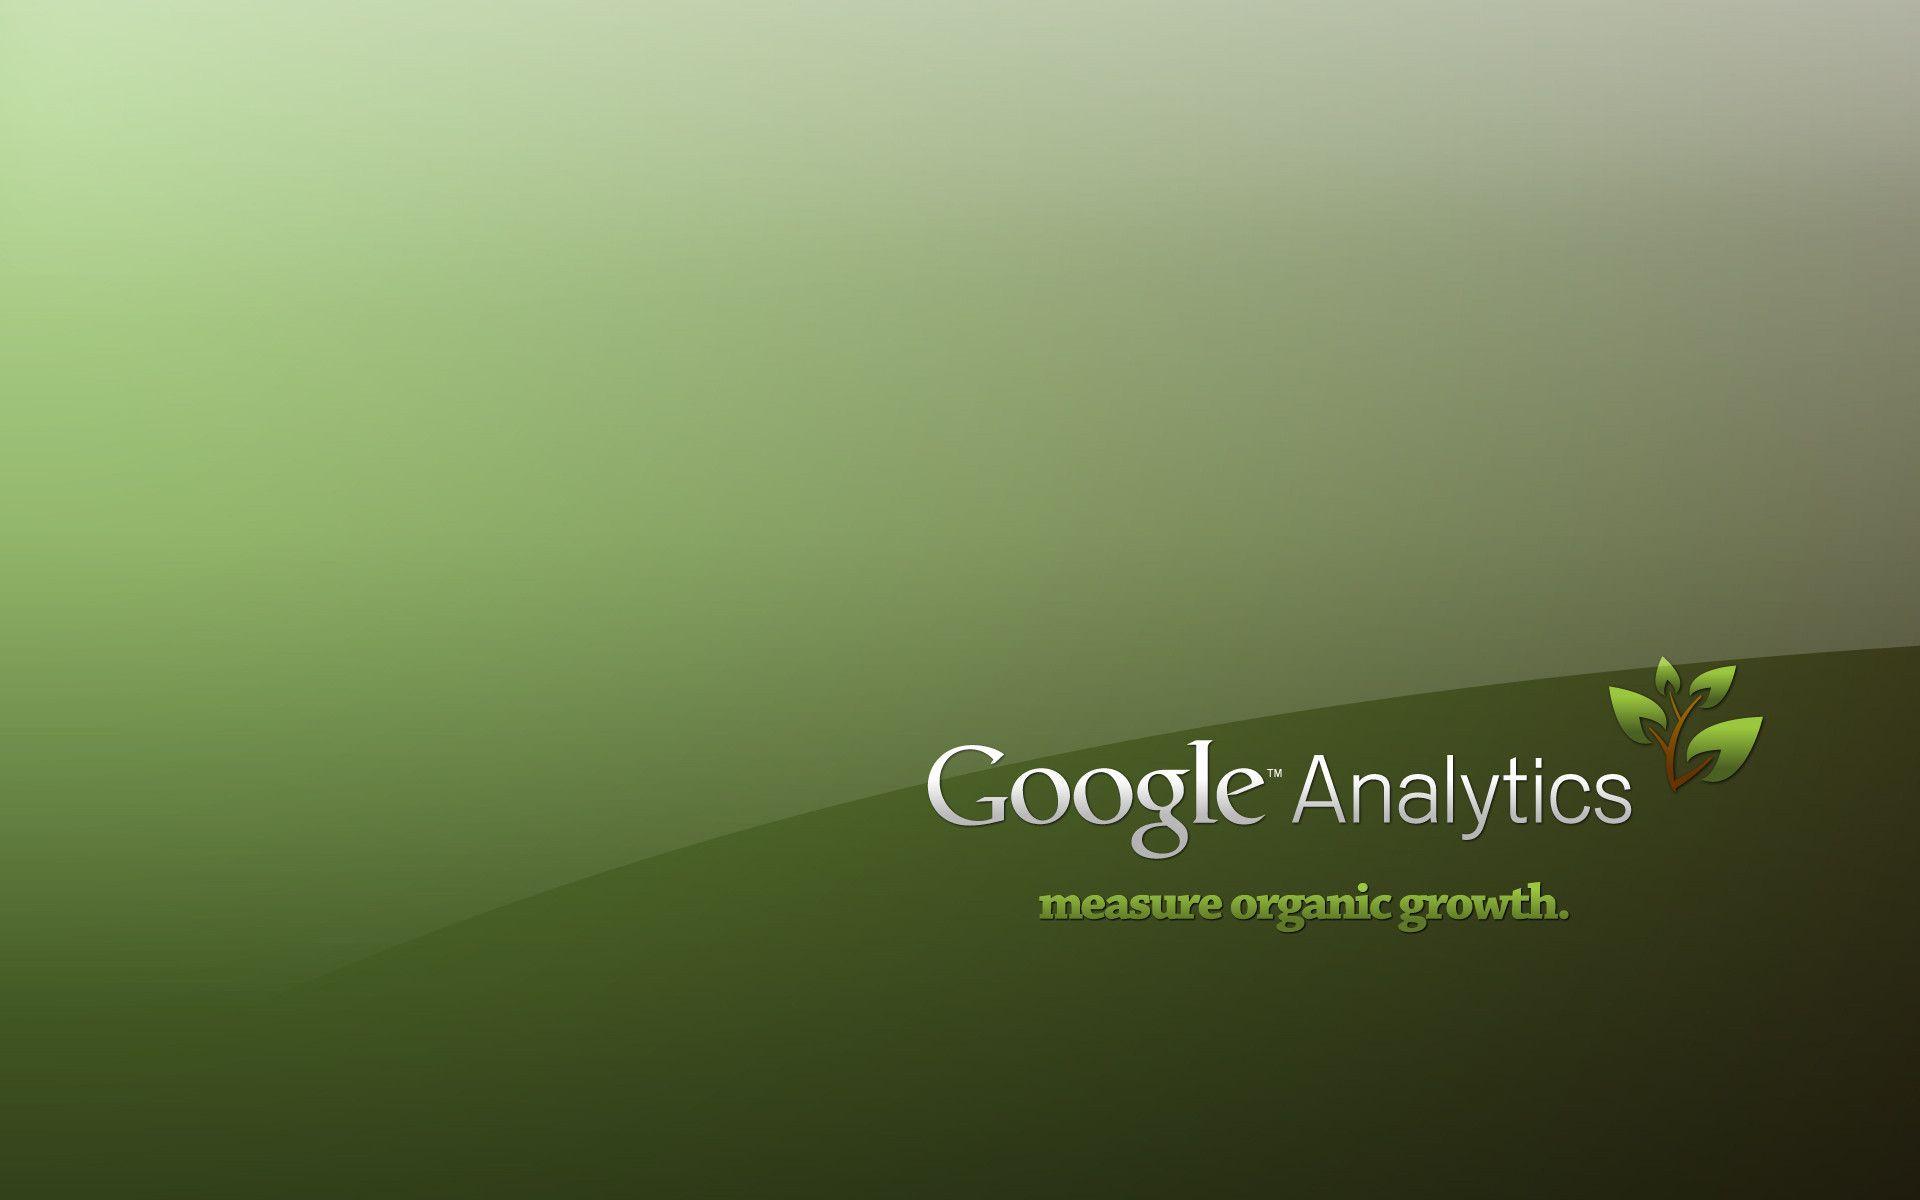 Google Analytics Background Wallpaper